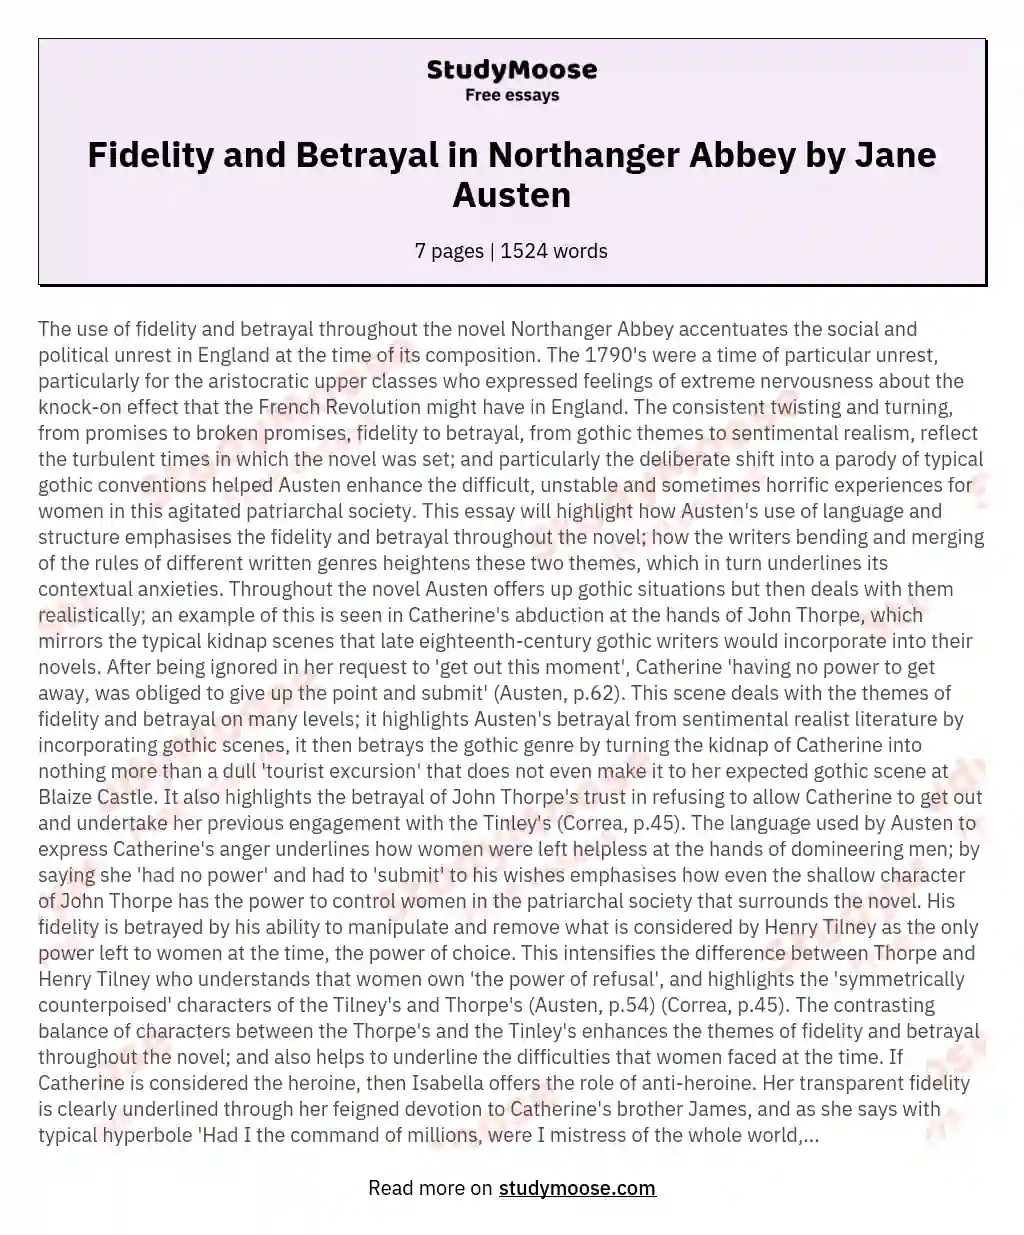 northanger abbey analysis